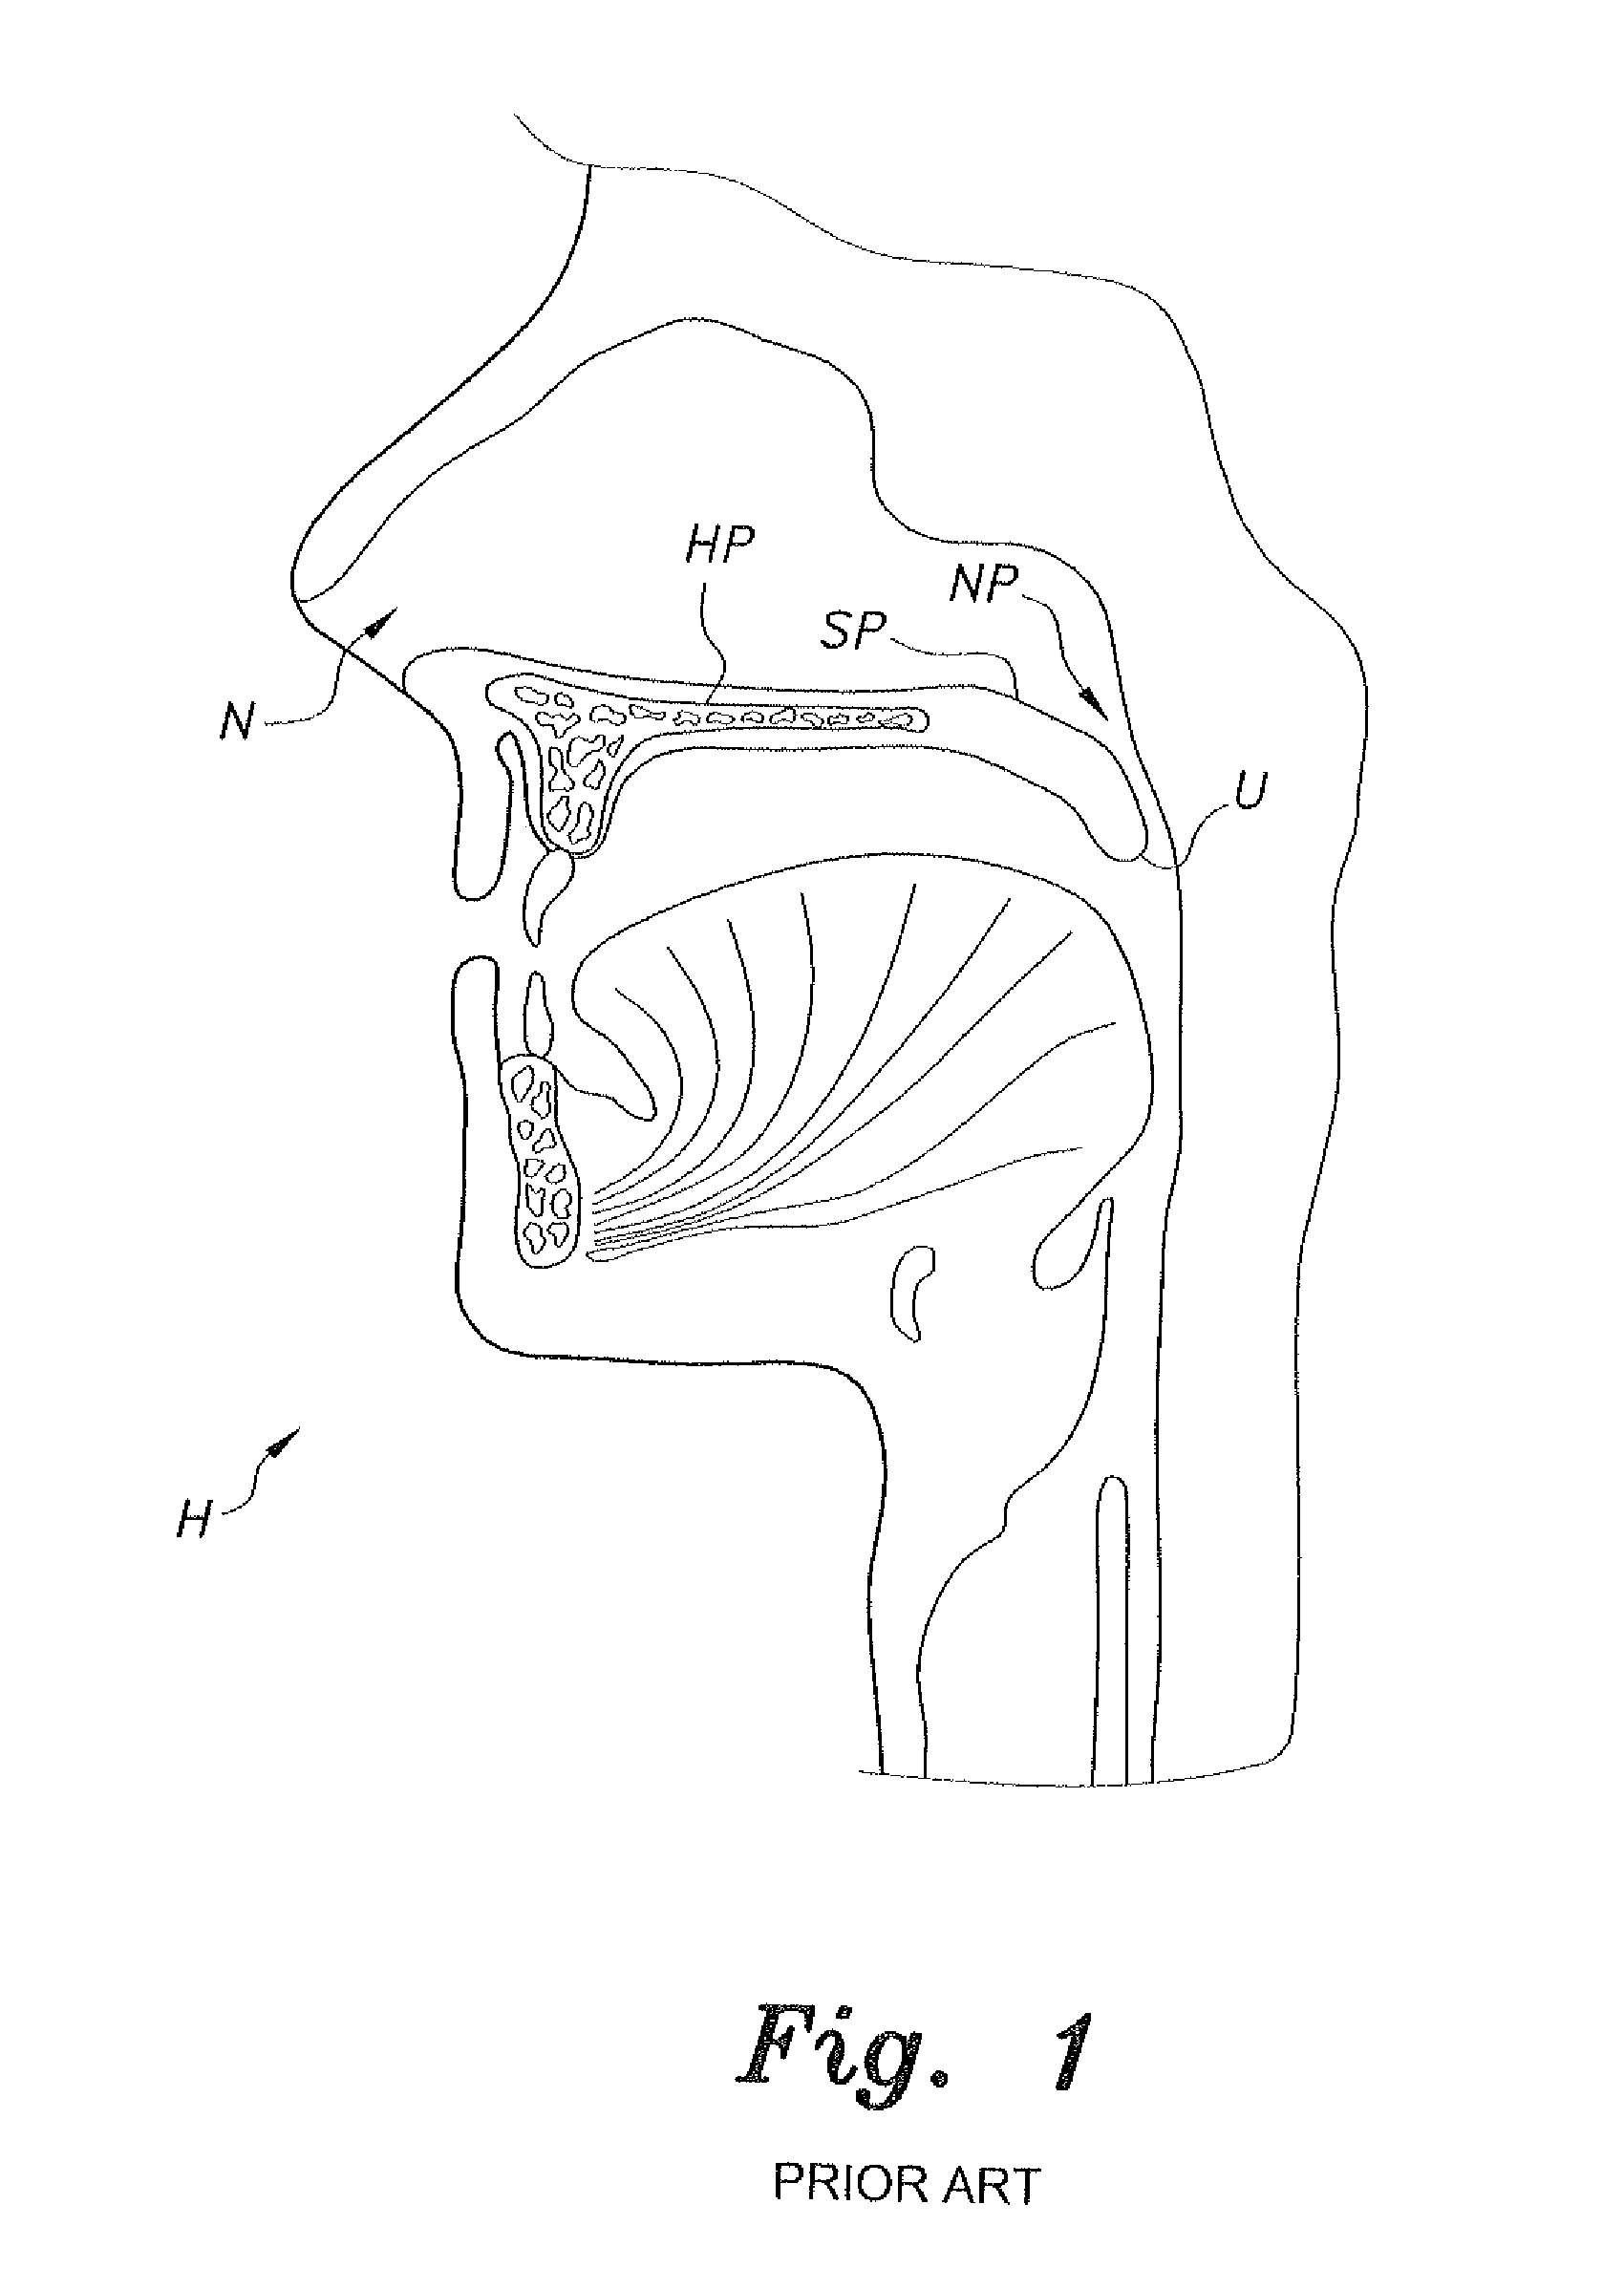 Endoscopic nasal palatoplasty